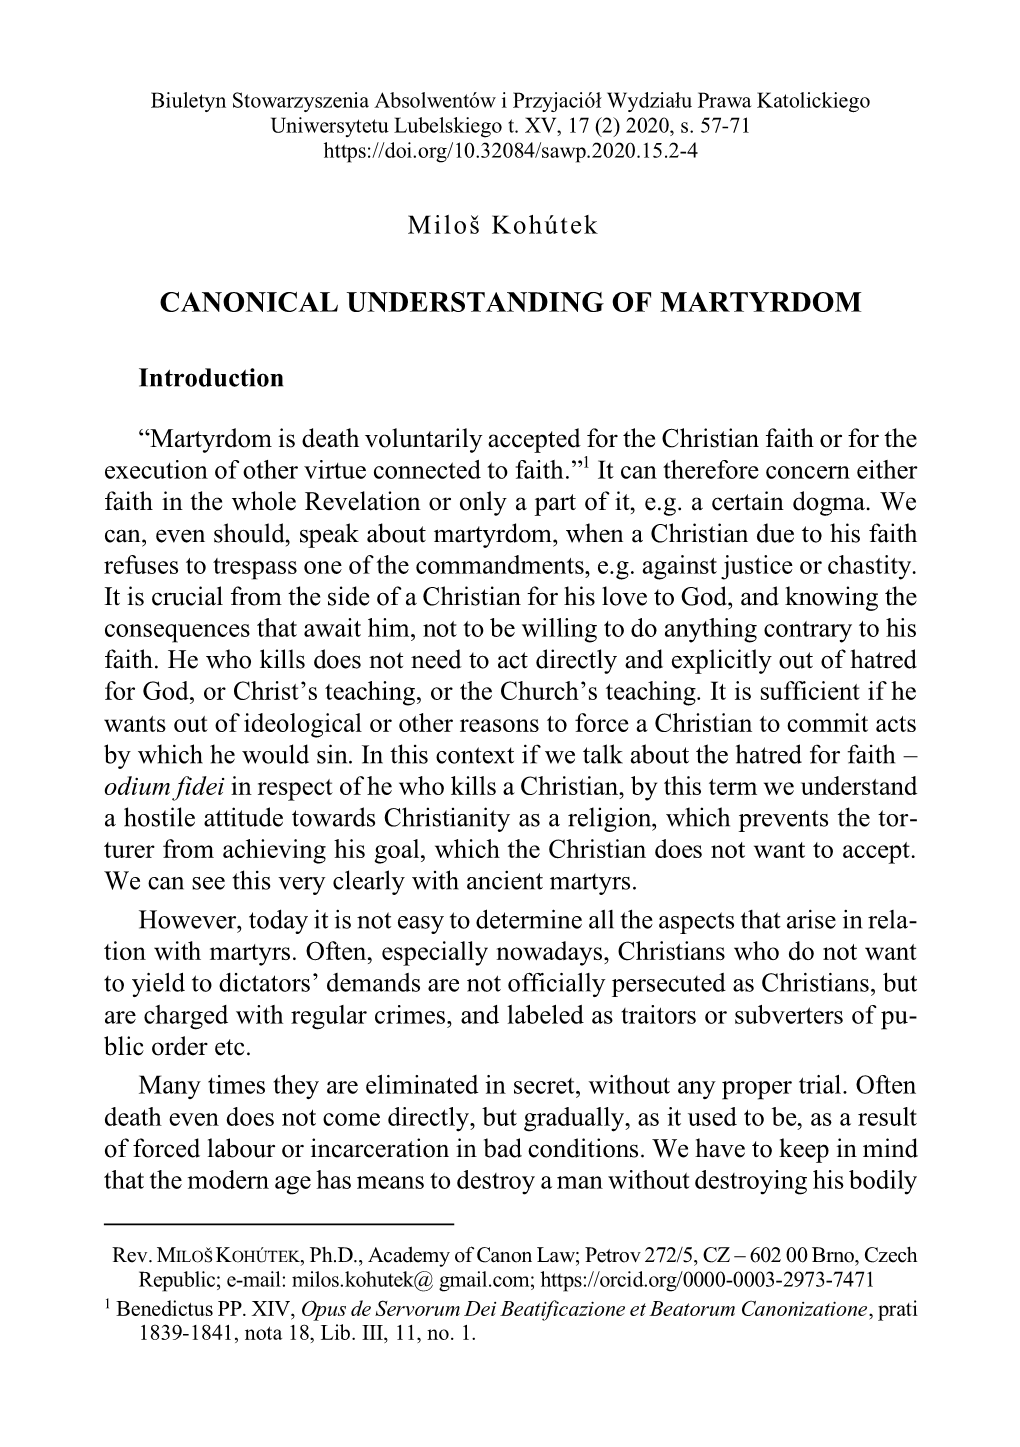 Canonical Understanding of Martyrdom